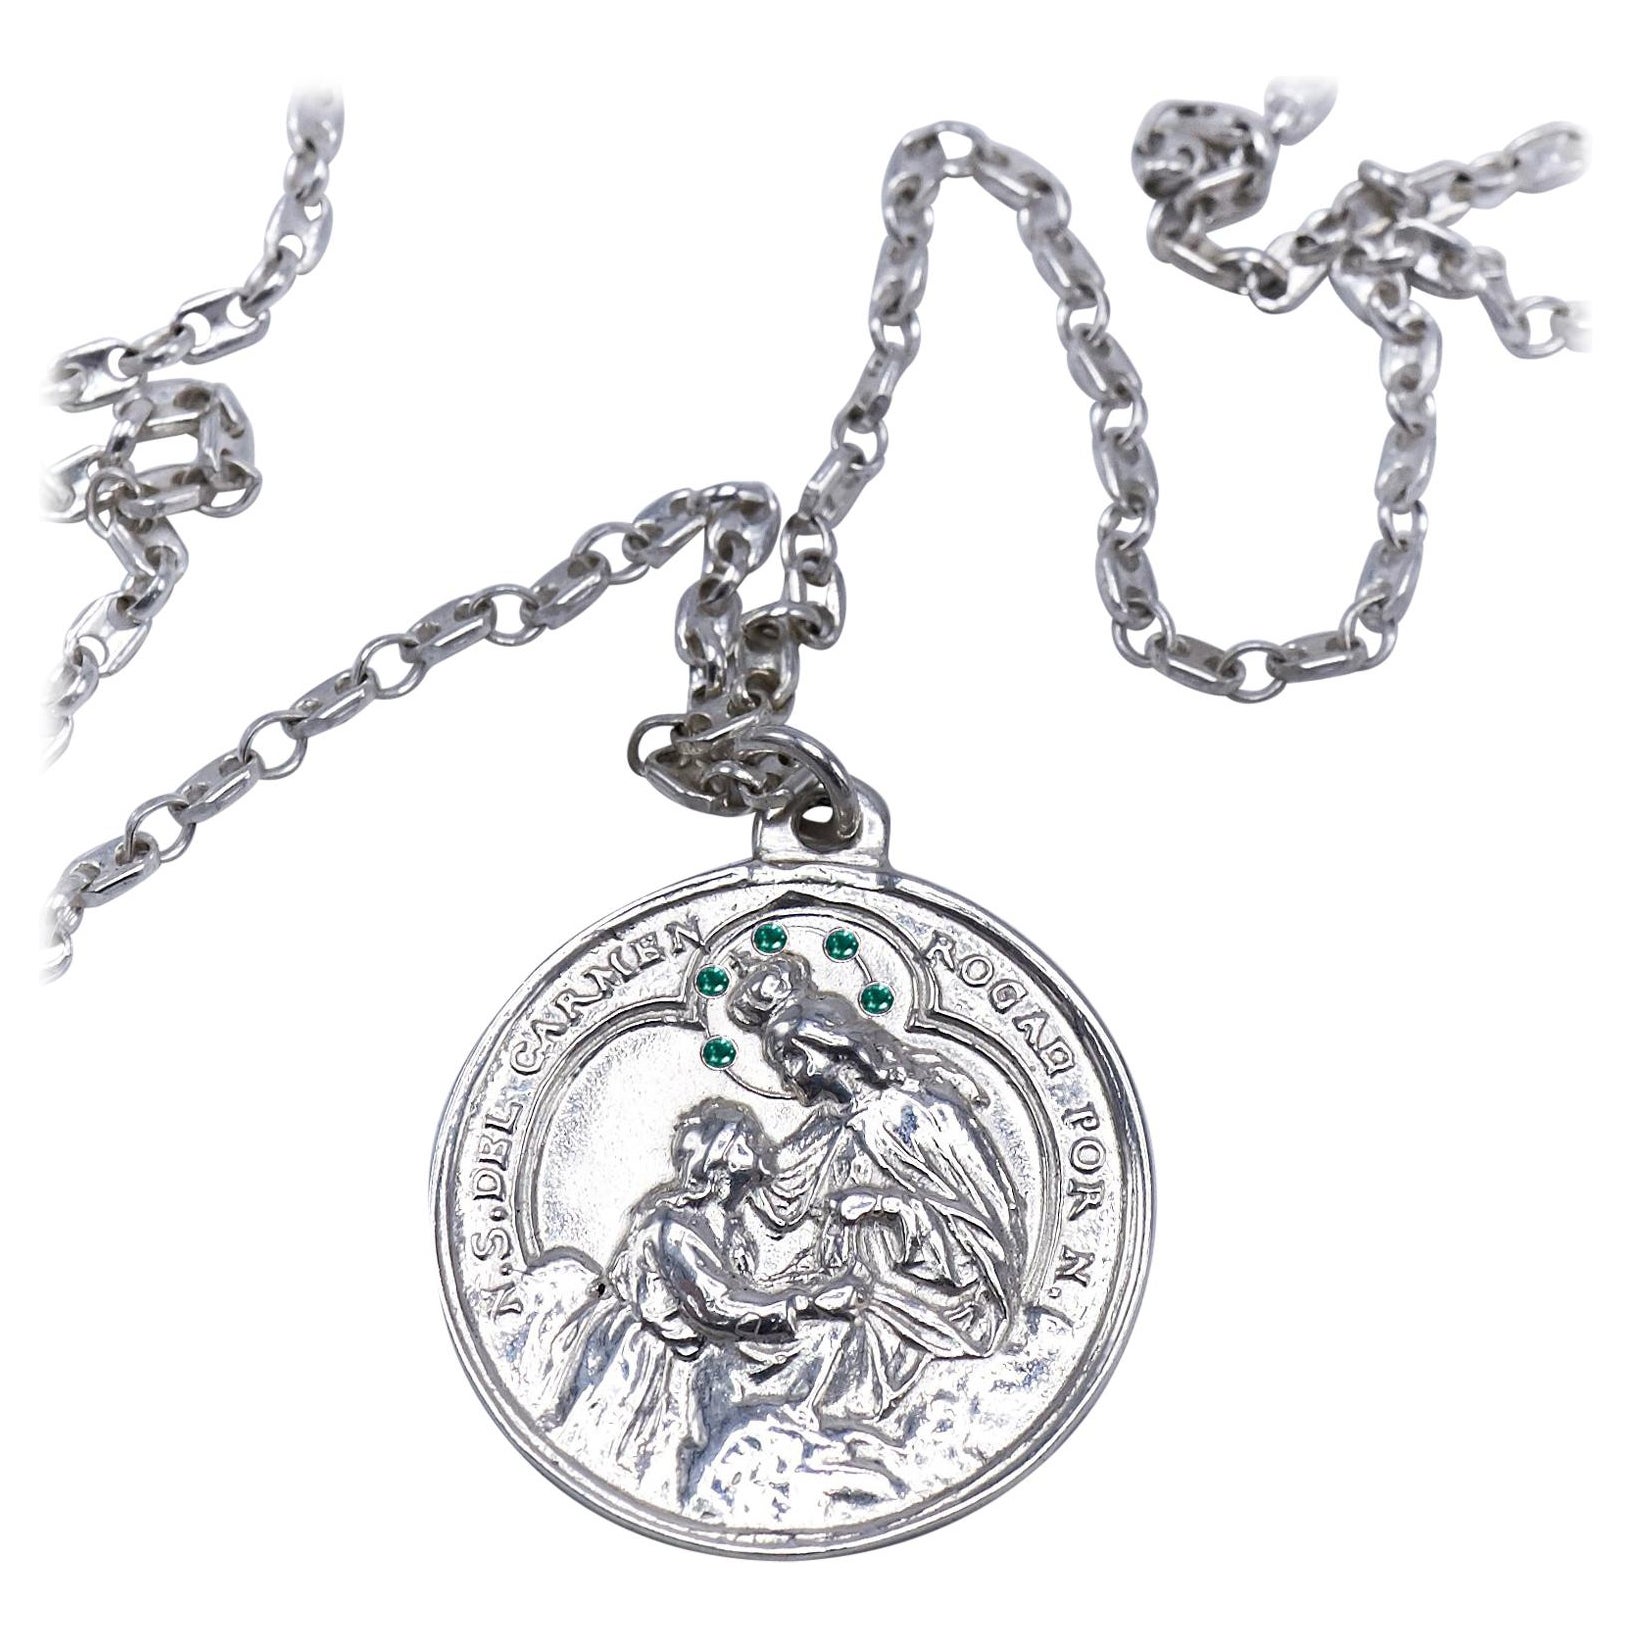 Smaragd Medaille Kette Halskette Silber Wunderschöne Jungfrau Maria J Dauphin mit Smaragd